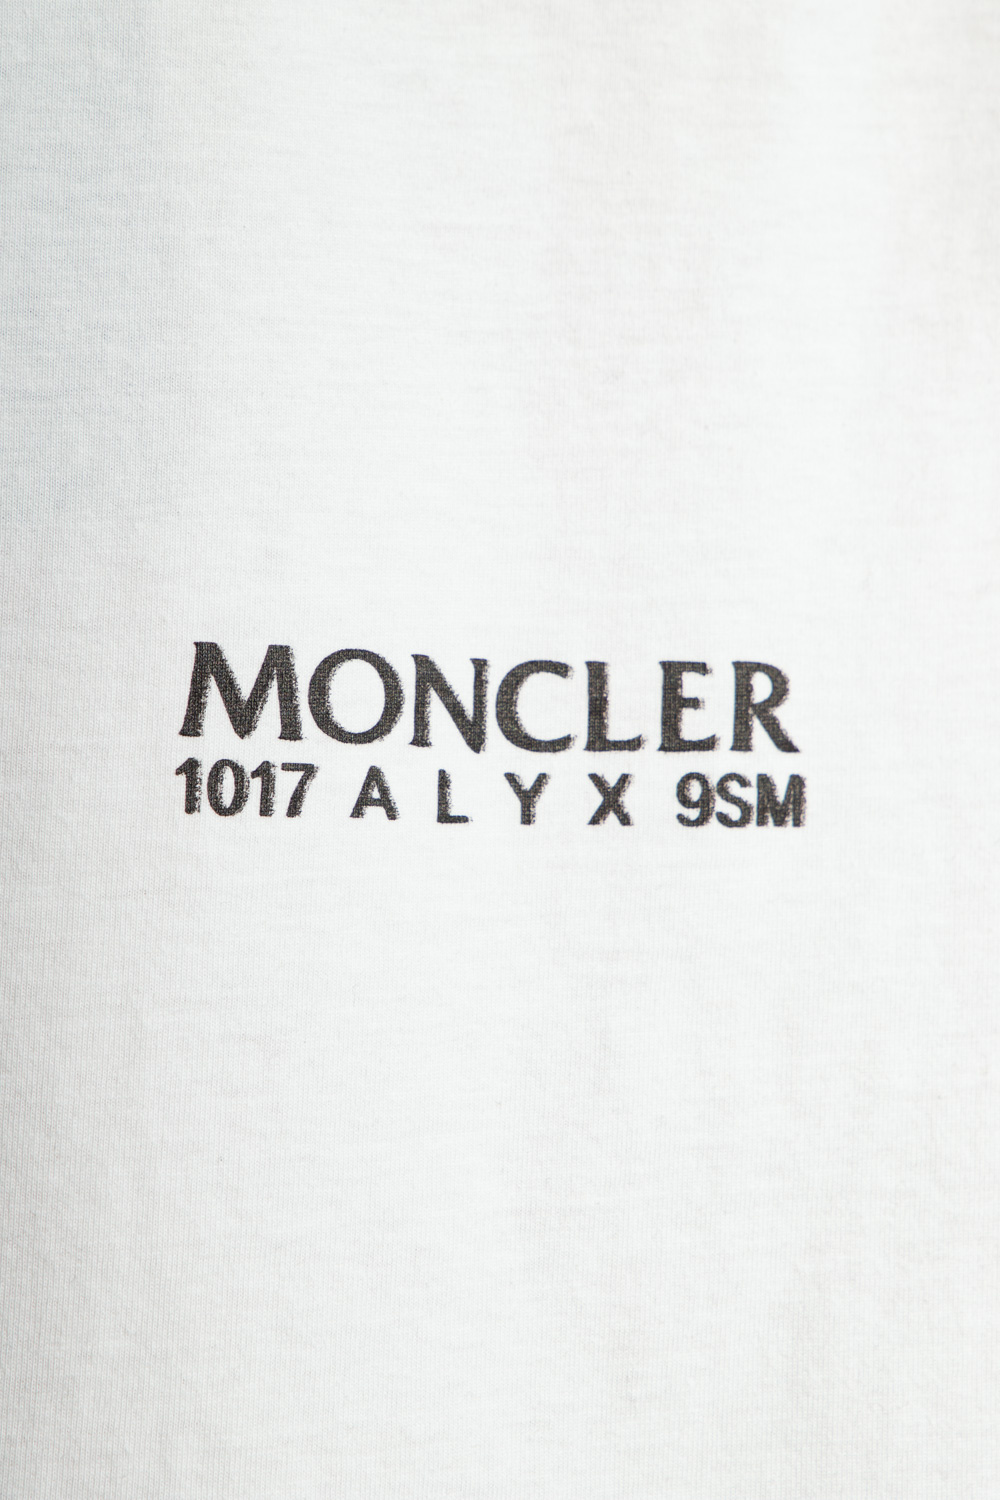 Moncler Genius 6 MONCLER 1017  ALYX 9SM